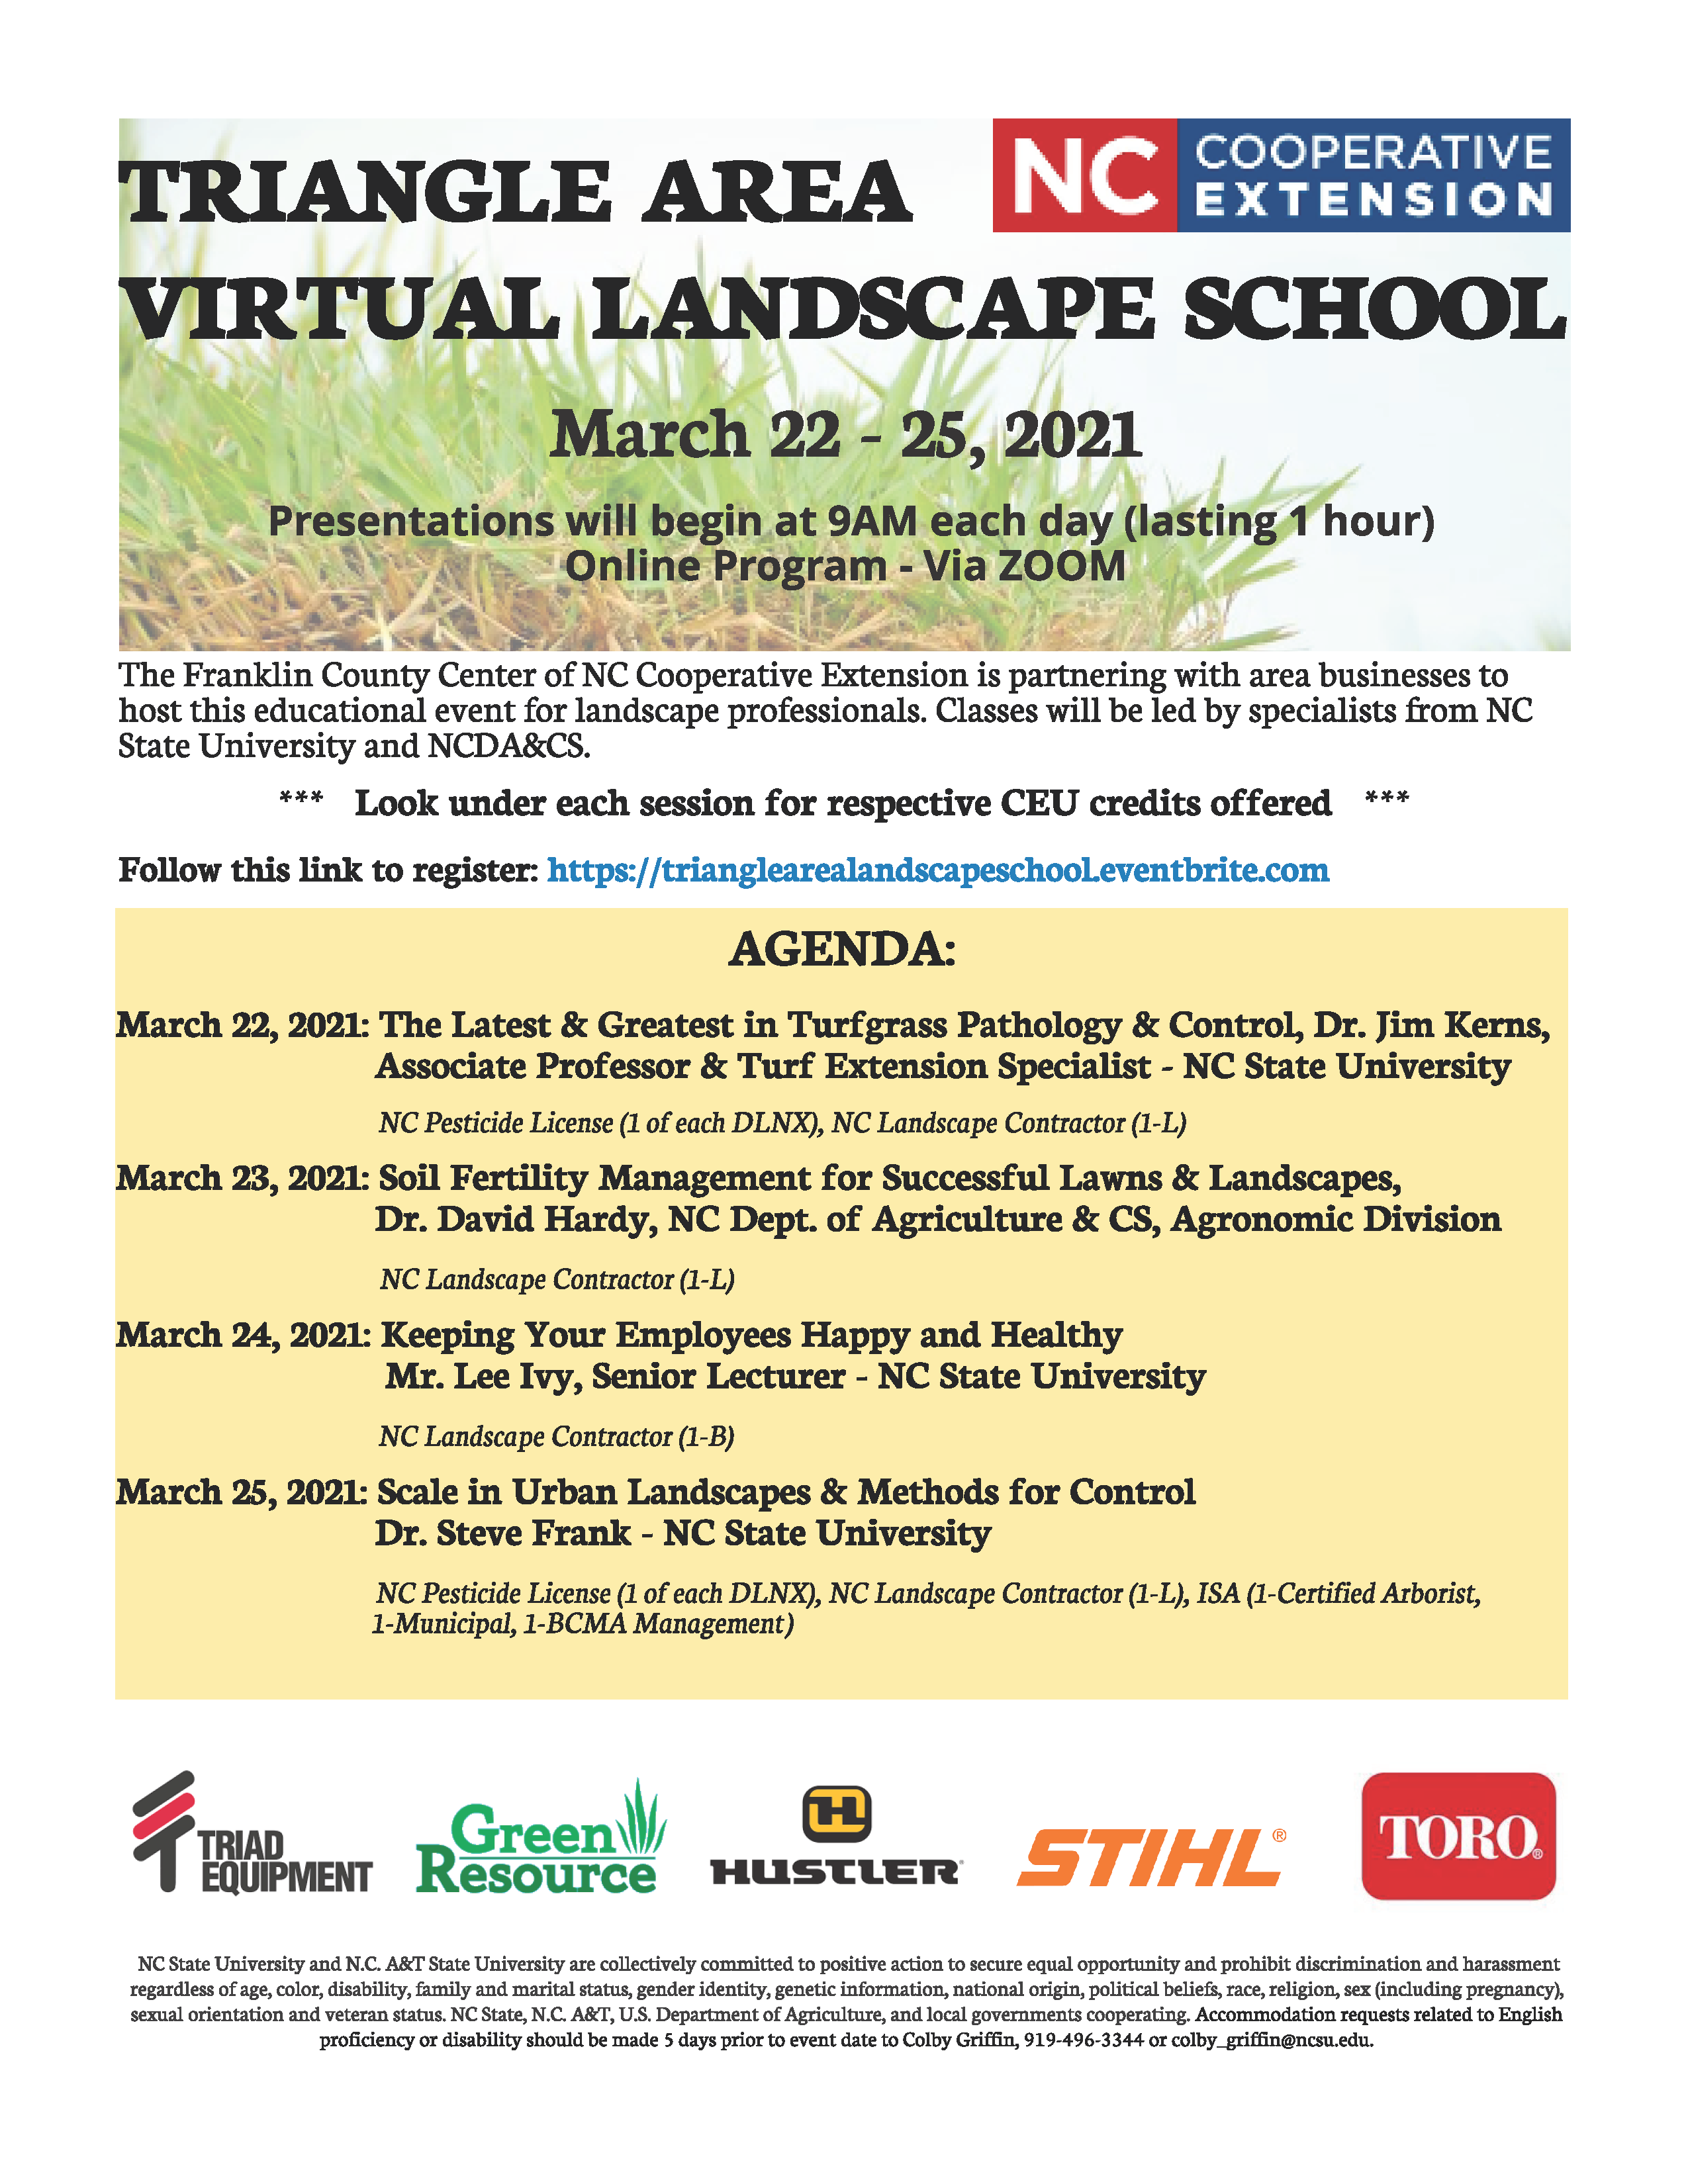 2021 Triangle Area Virtual Landscape School flyer